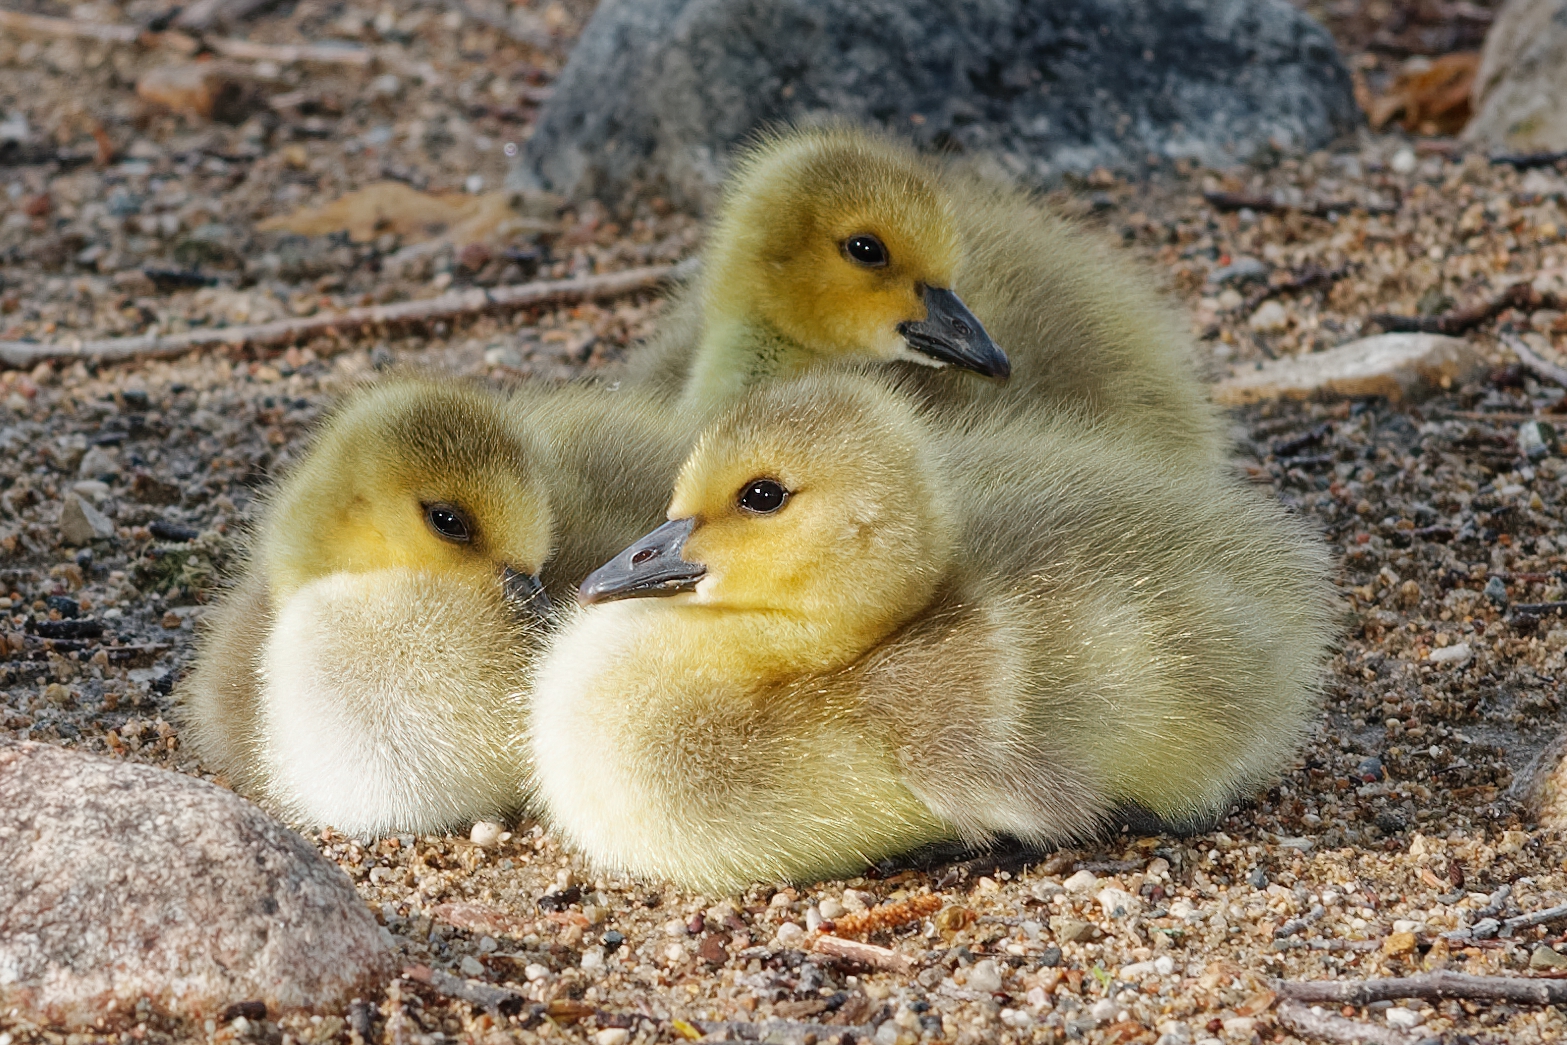 Fluffy Canada goose goslings cuddle together in the Alberta summertime. RICHARD SCHNEIDER